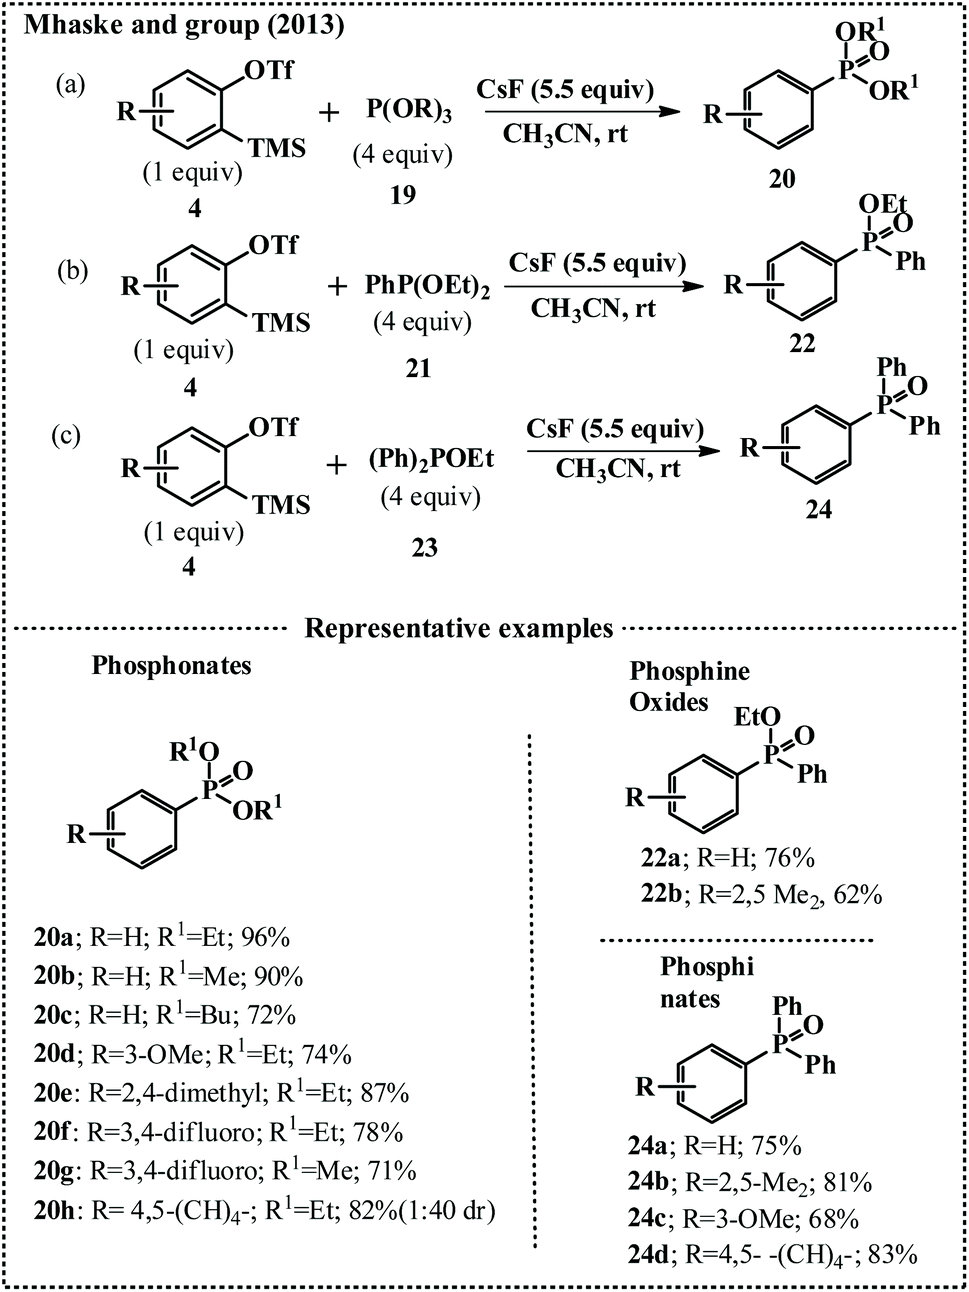 Recent Advances In The Synthesis Of Organophosphorus Compounds Via Kobayashi S Aryne Precursor A Review Organic Biomolecular Chemistry Rsc Publishing